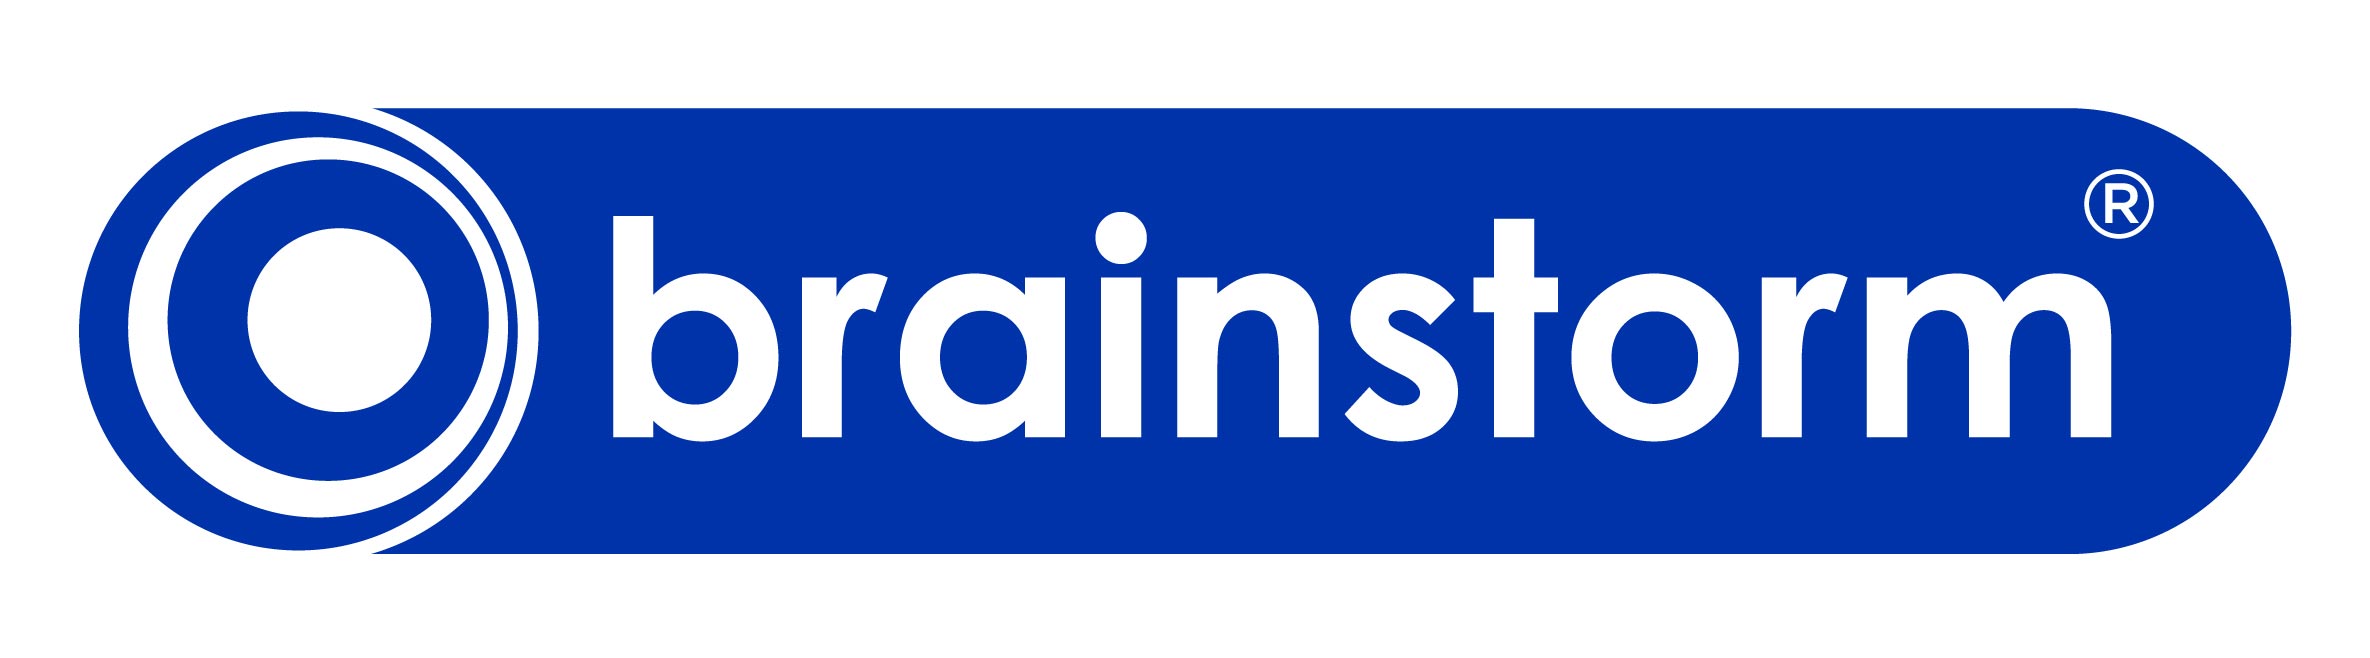 Brainstorm-Logo